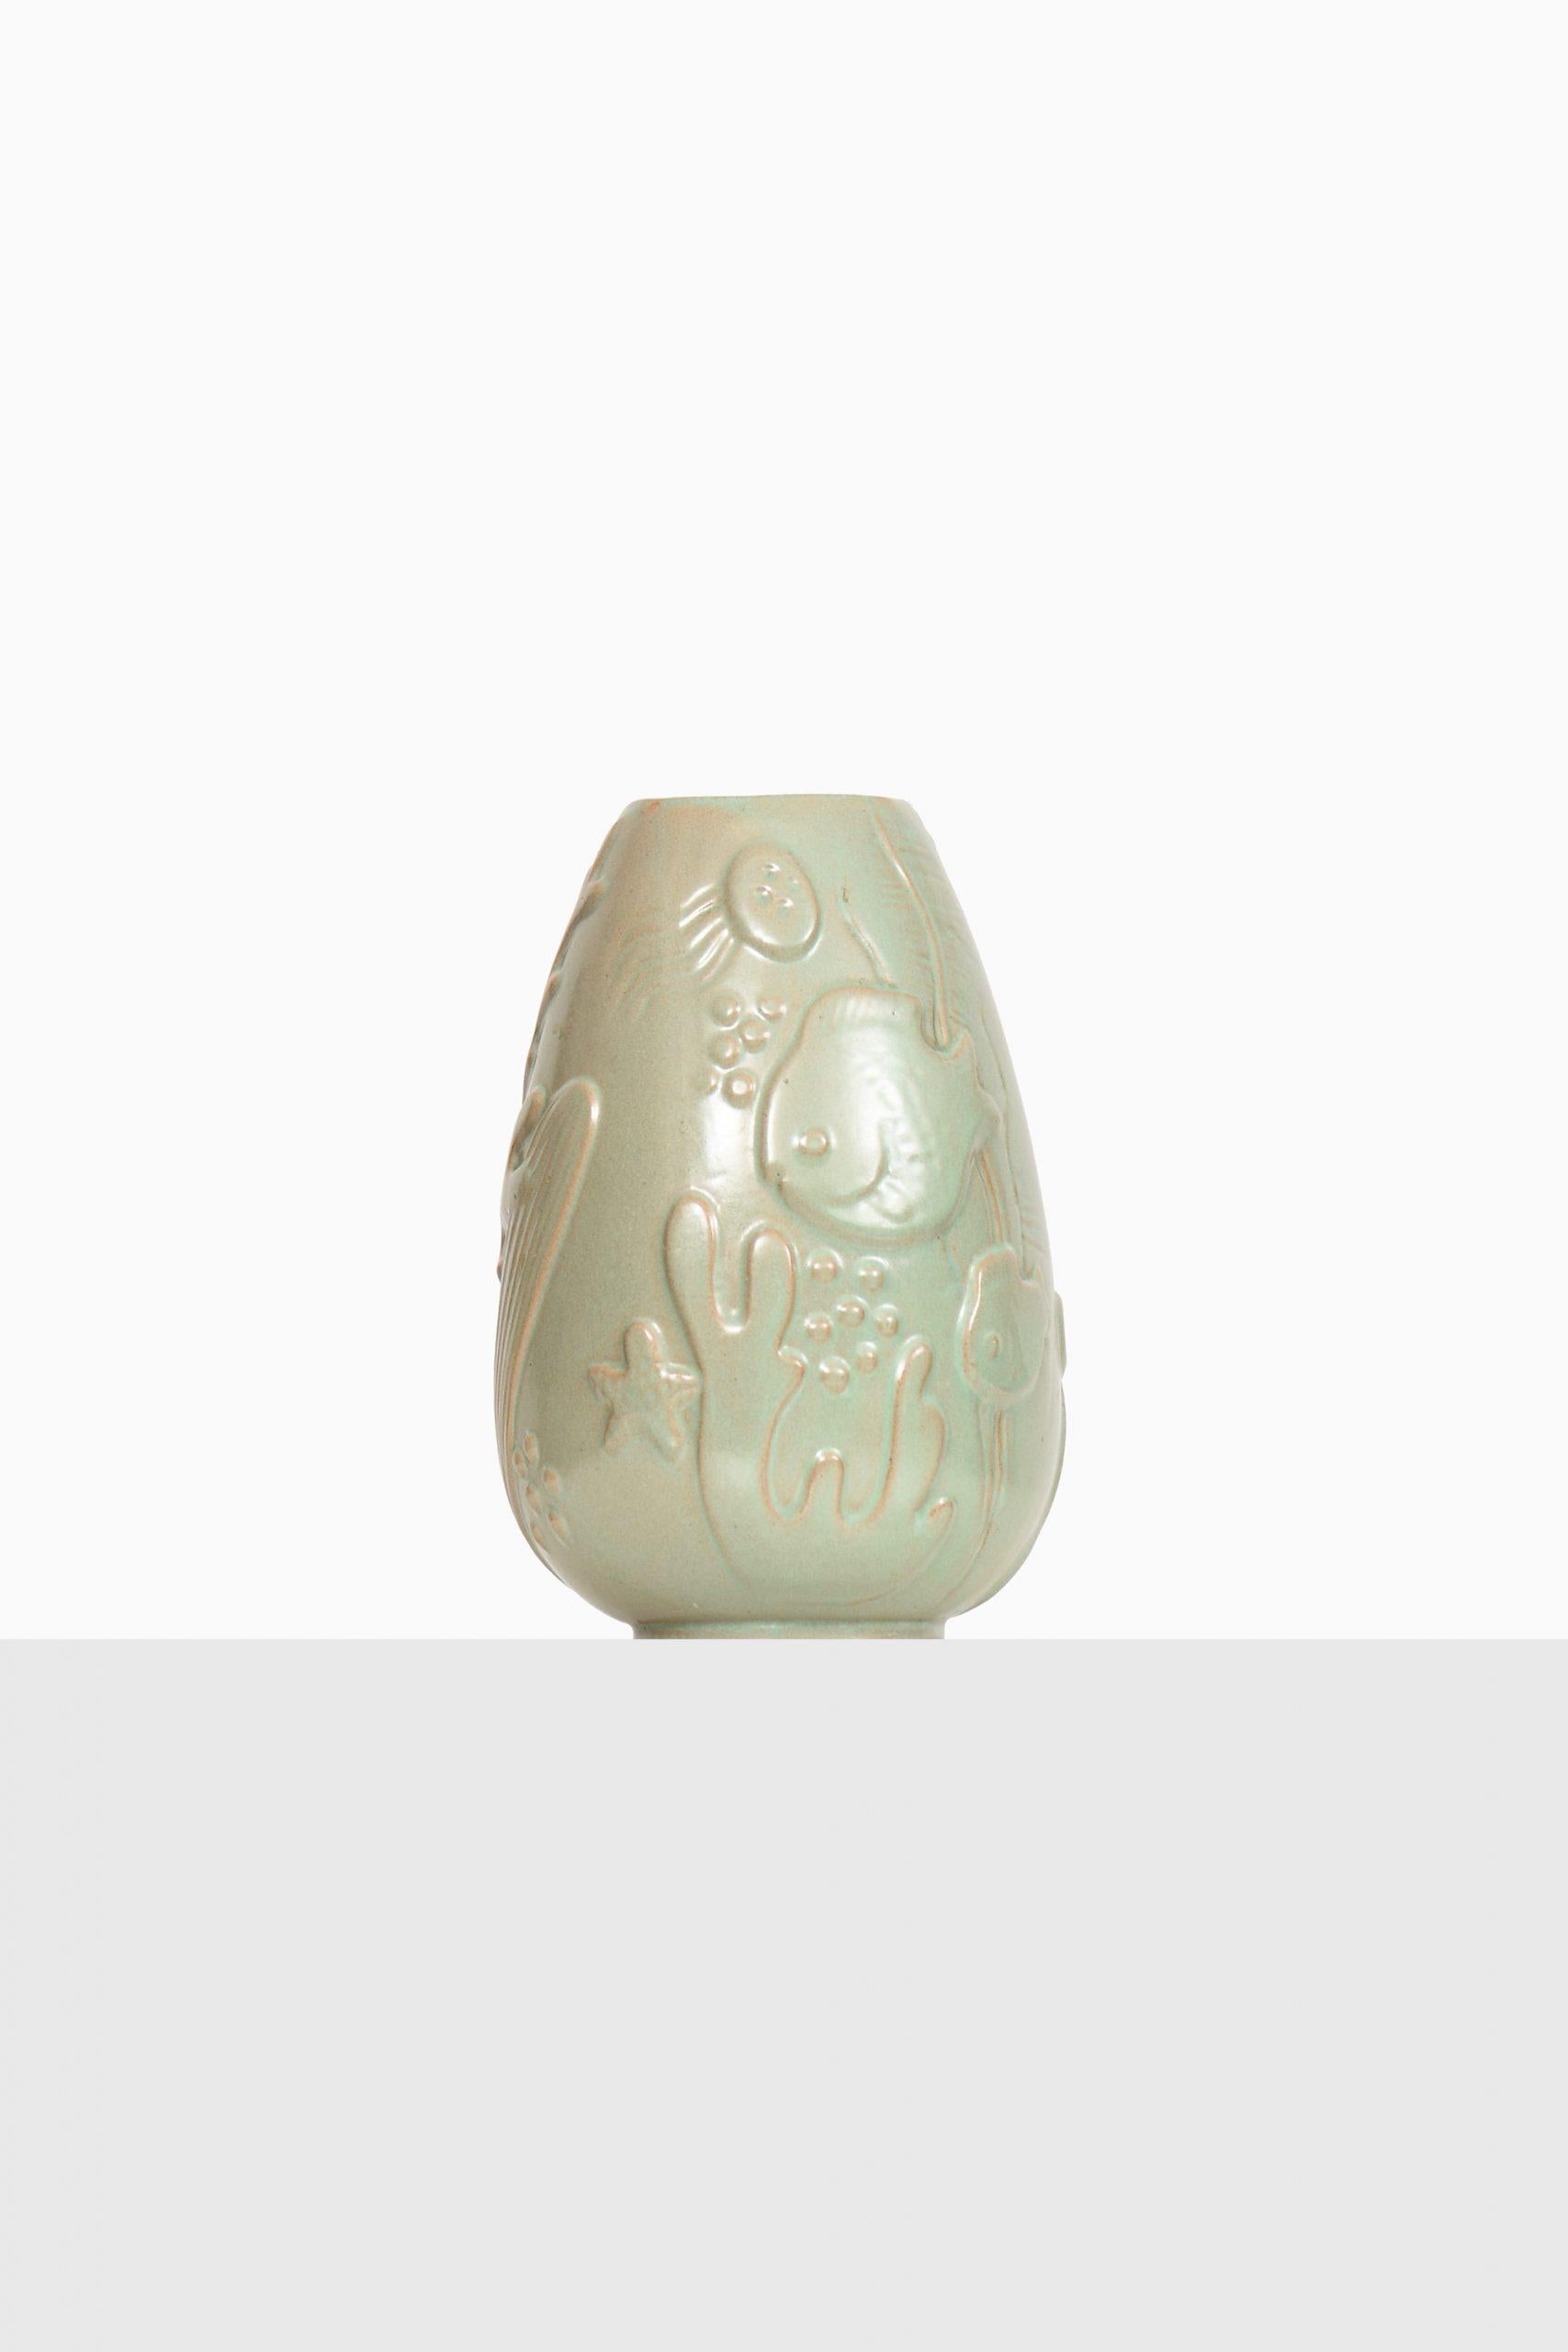 Rare ceramic vase designed by Anna-Lisa Thomson. Produced by Upsala Ekeby in Sweden.